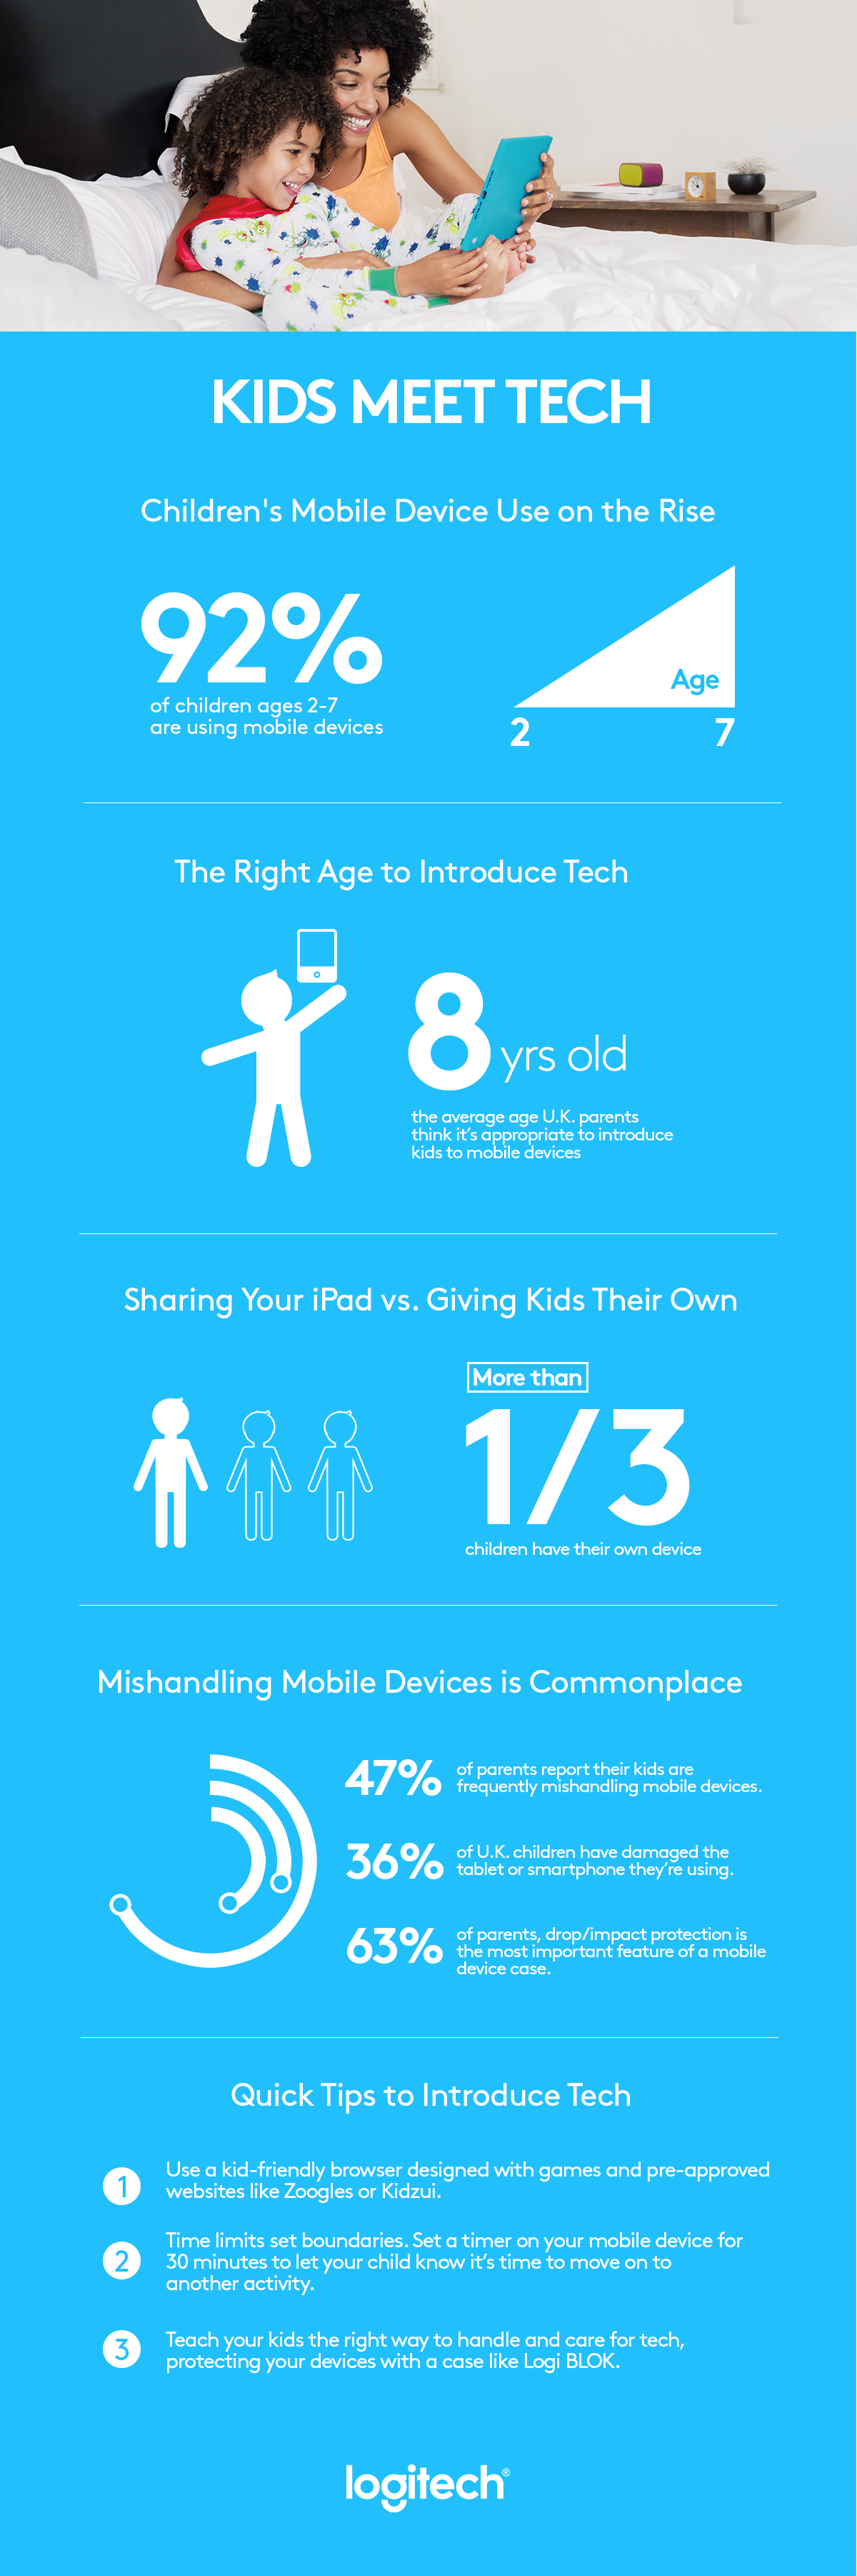 KidsMeetTech_Infographic_BLOK_UK